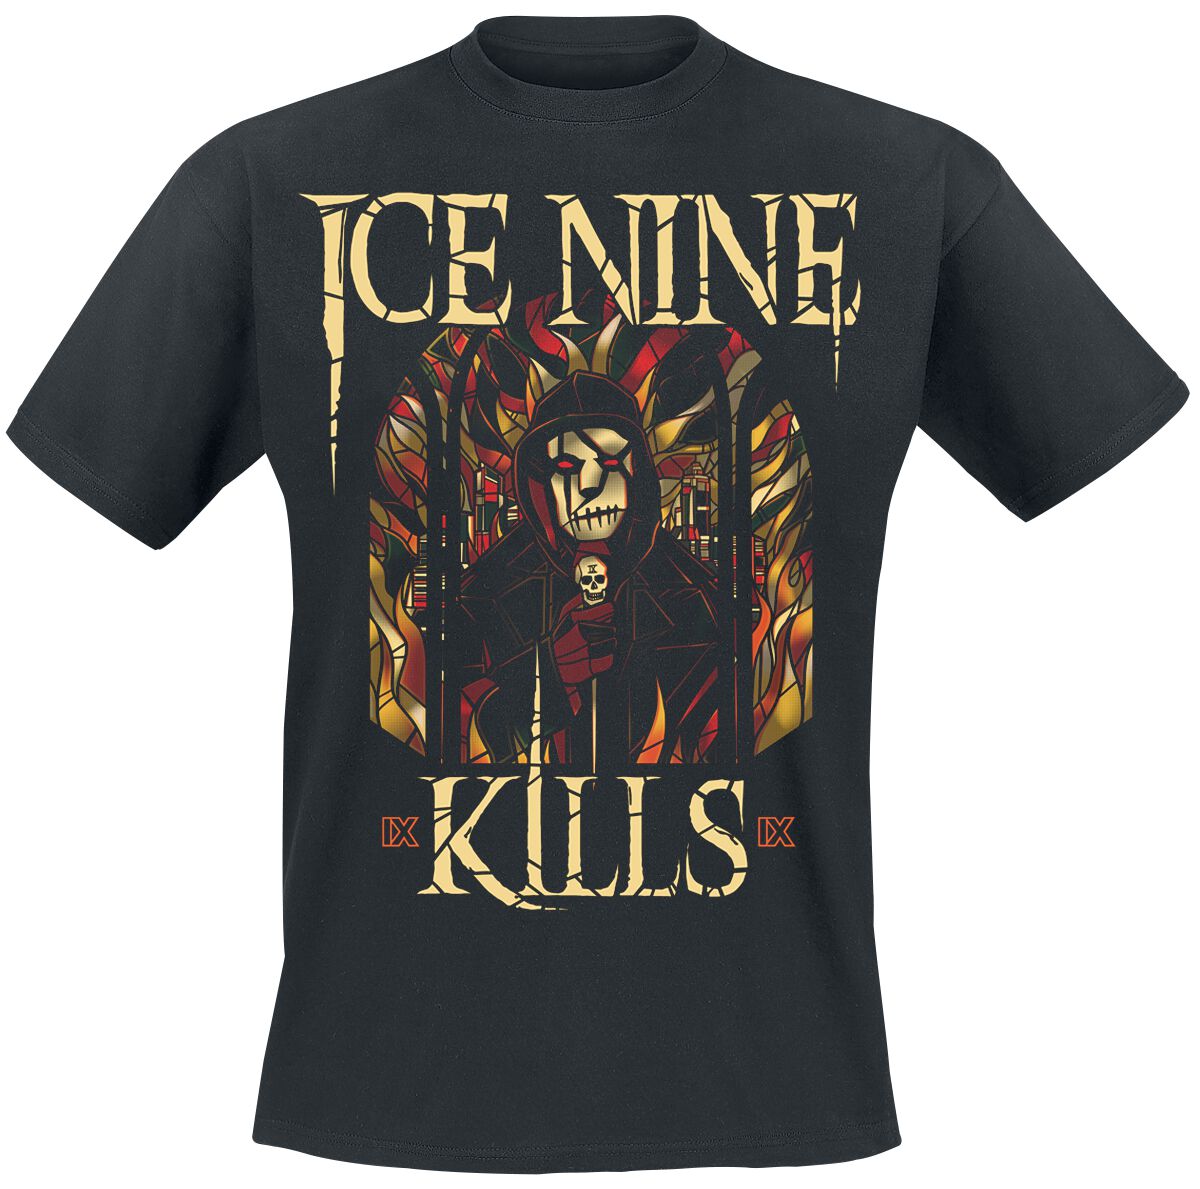 Ice Nine Kills Stained Glass T-Shirt schwarz in M